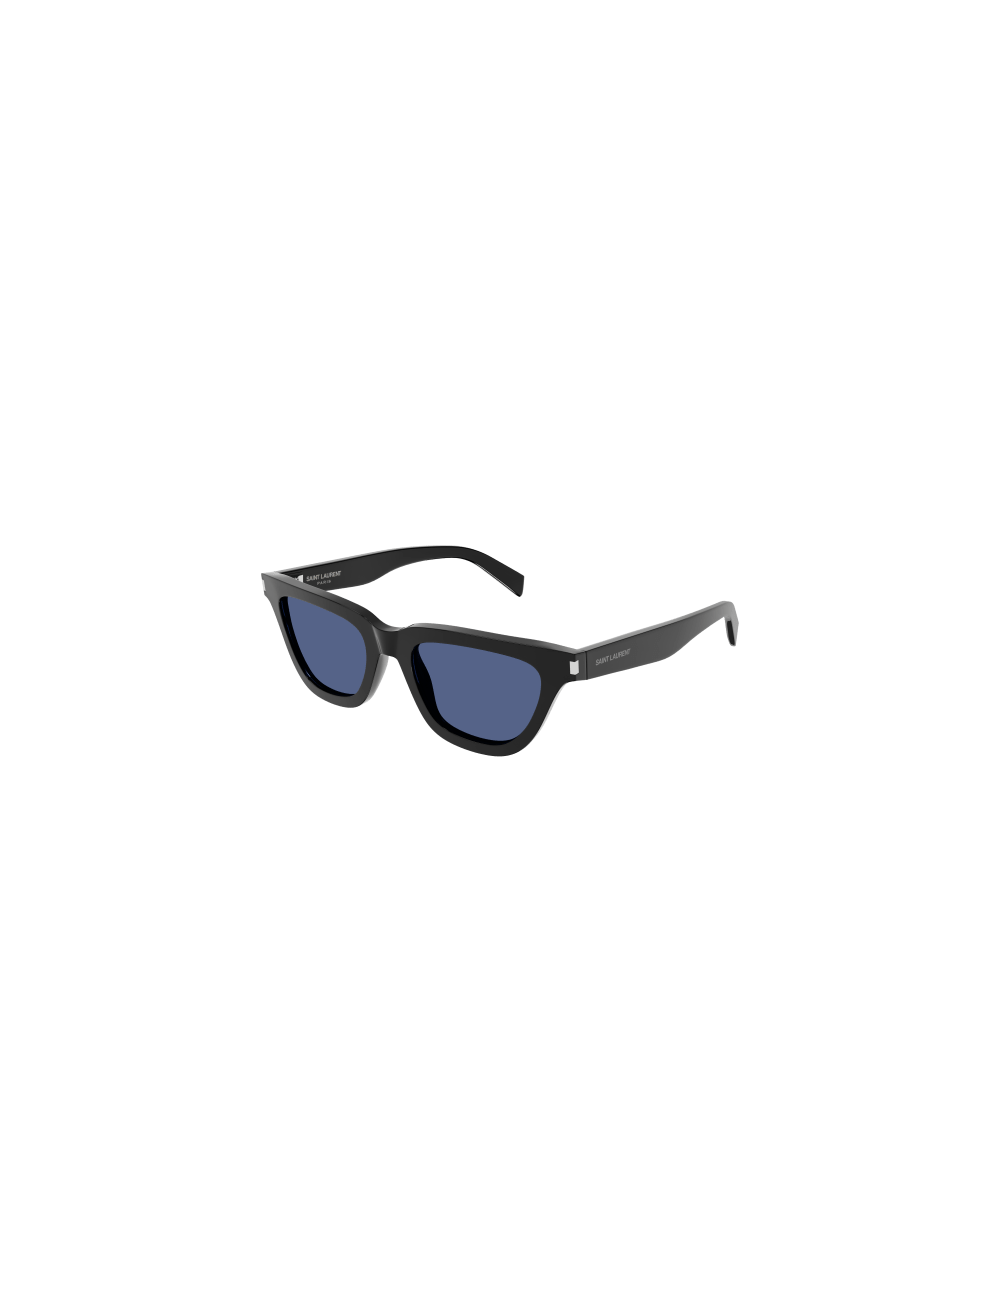 Saint Laurent SL 462 SULPICE 014 sunglasses